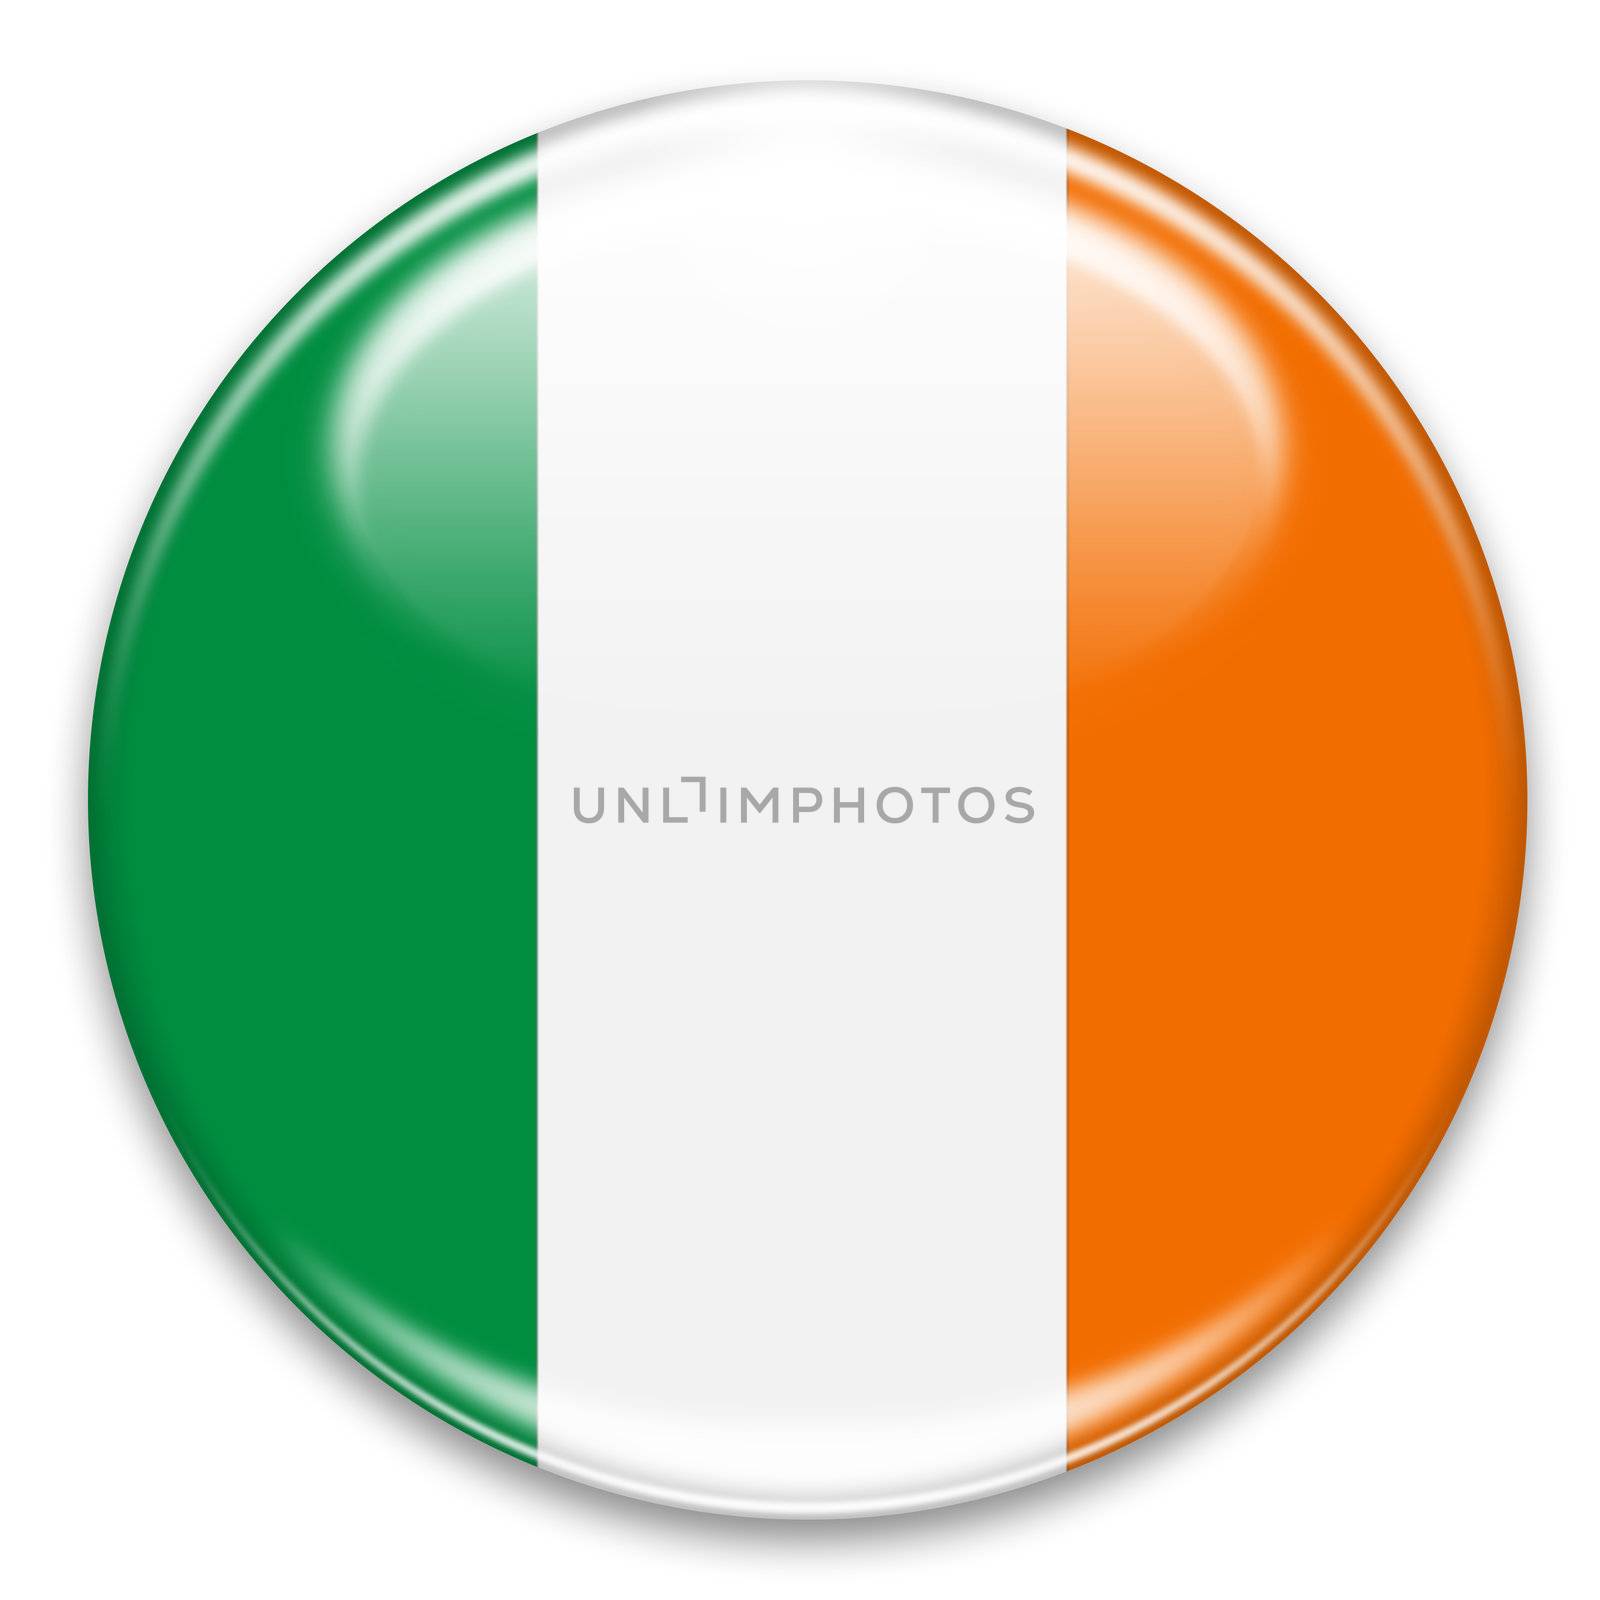 irish flag button isolated on white